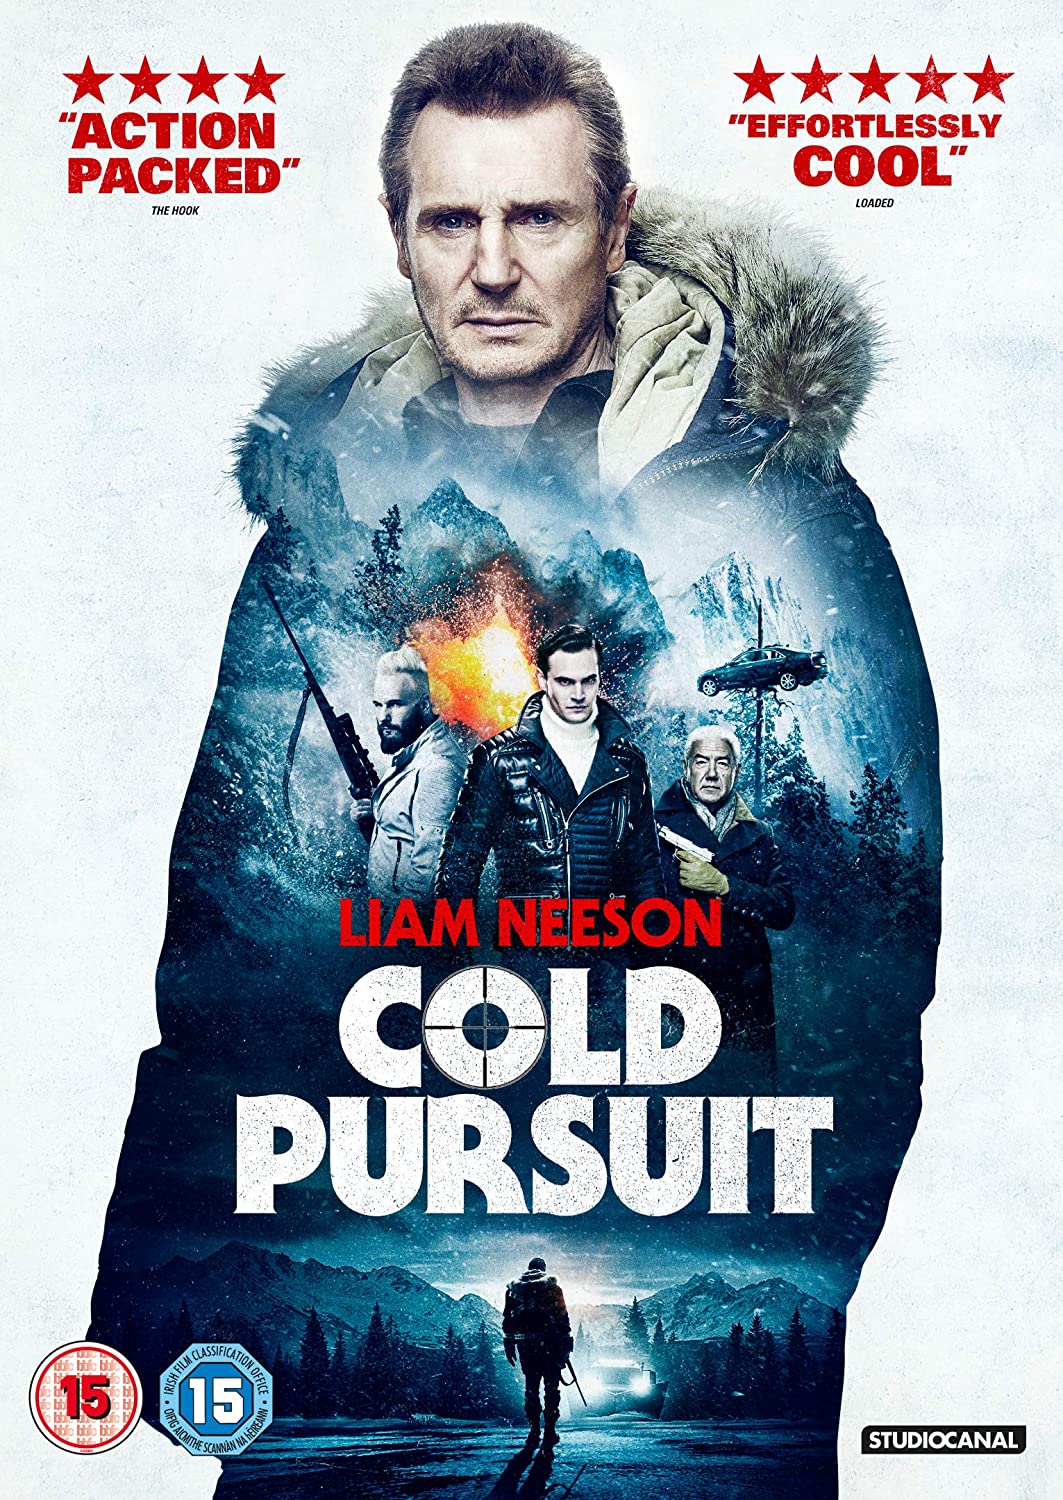 Cold Pursuit - Action/Thriller [DVD]